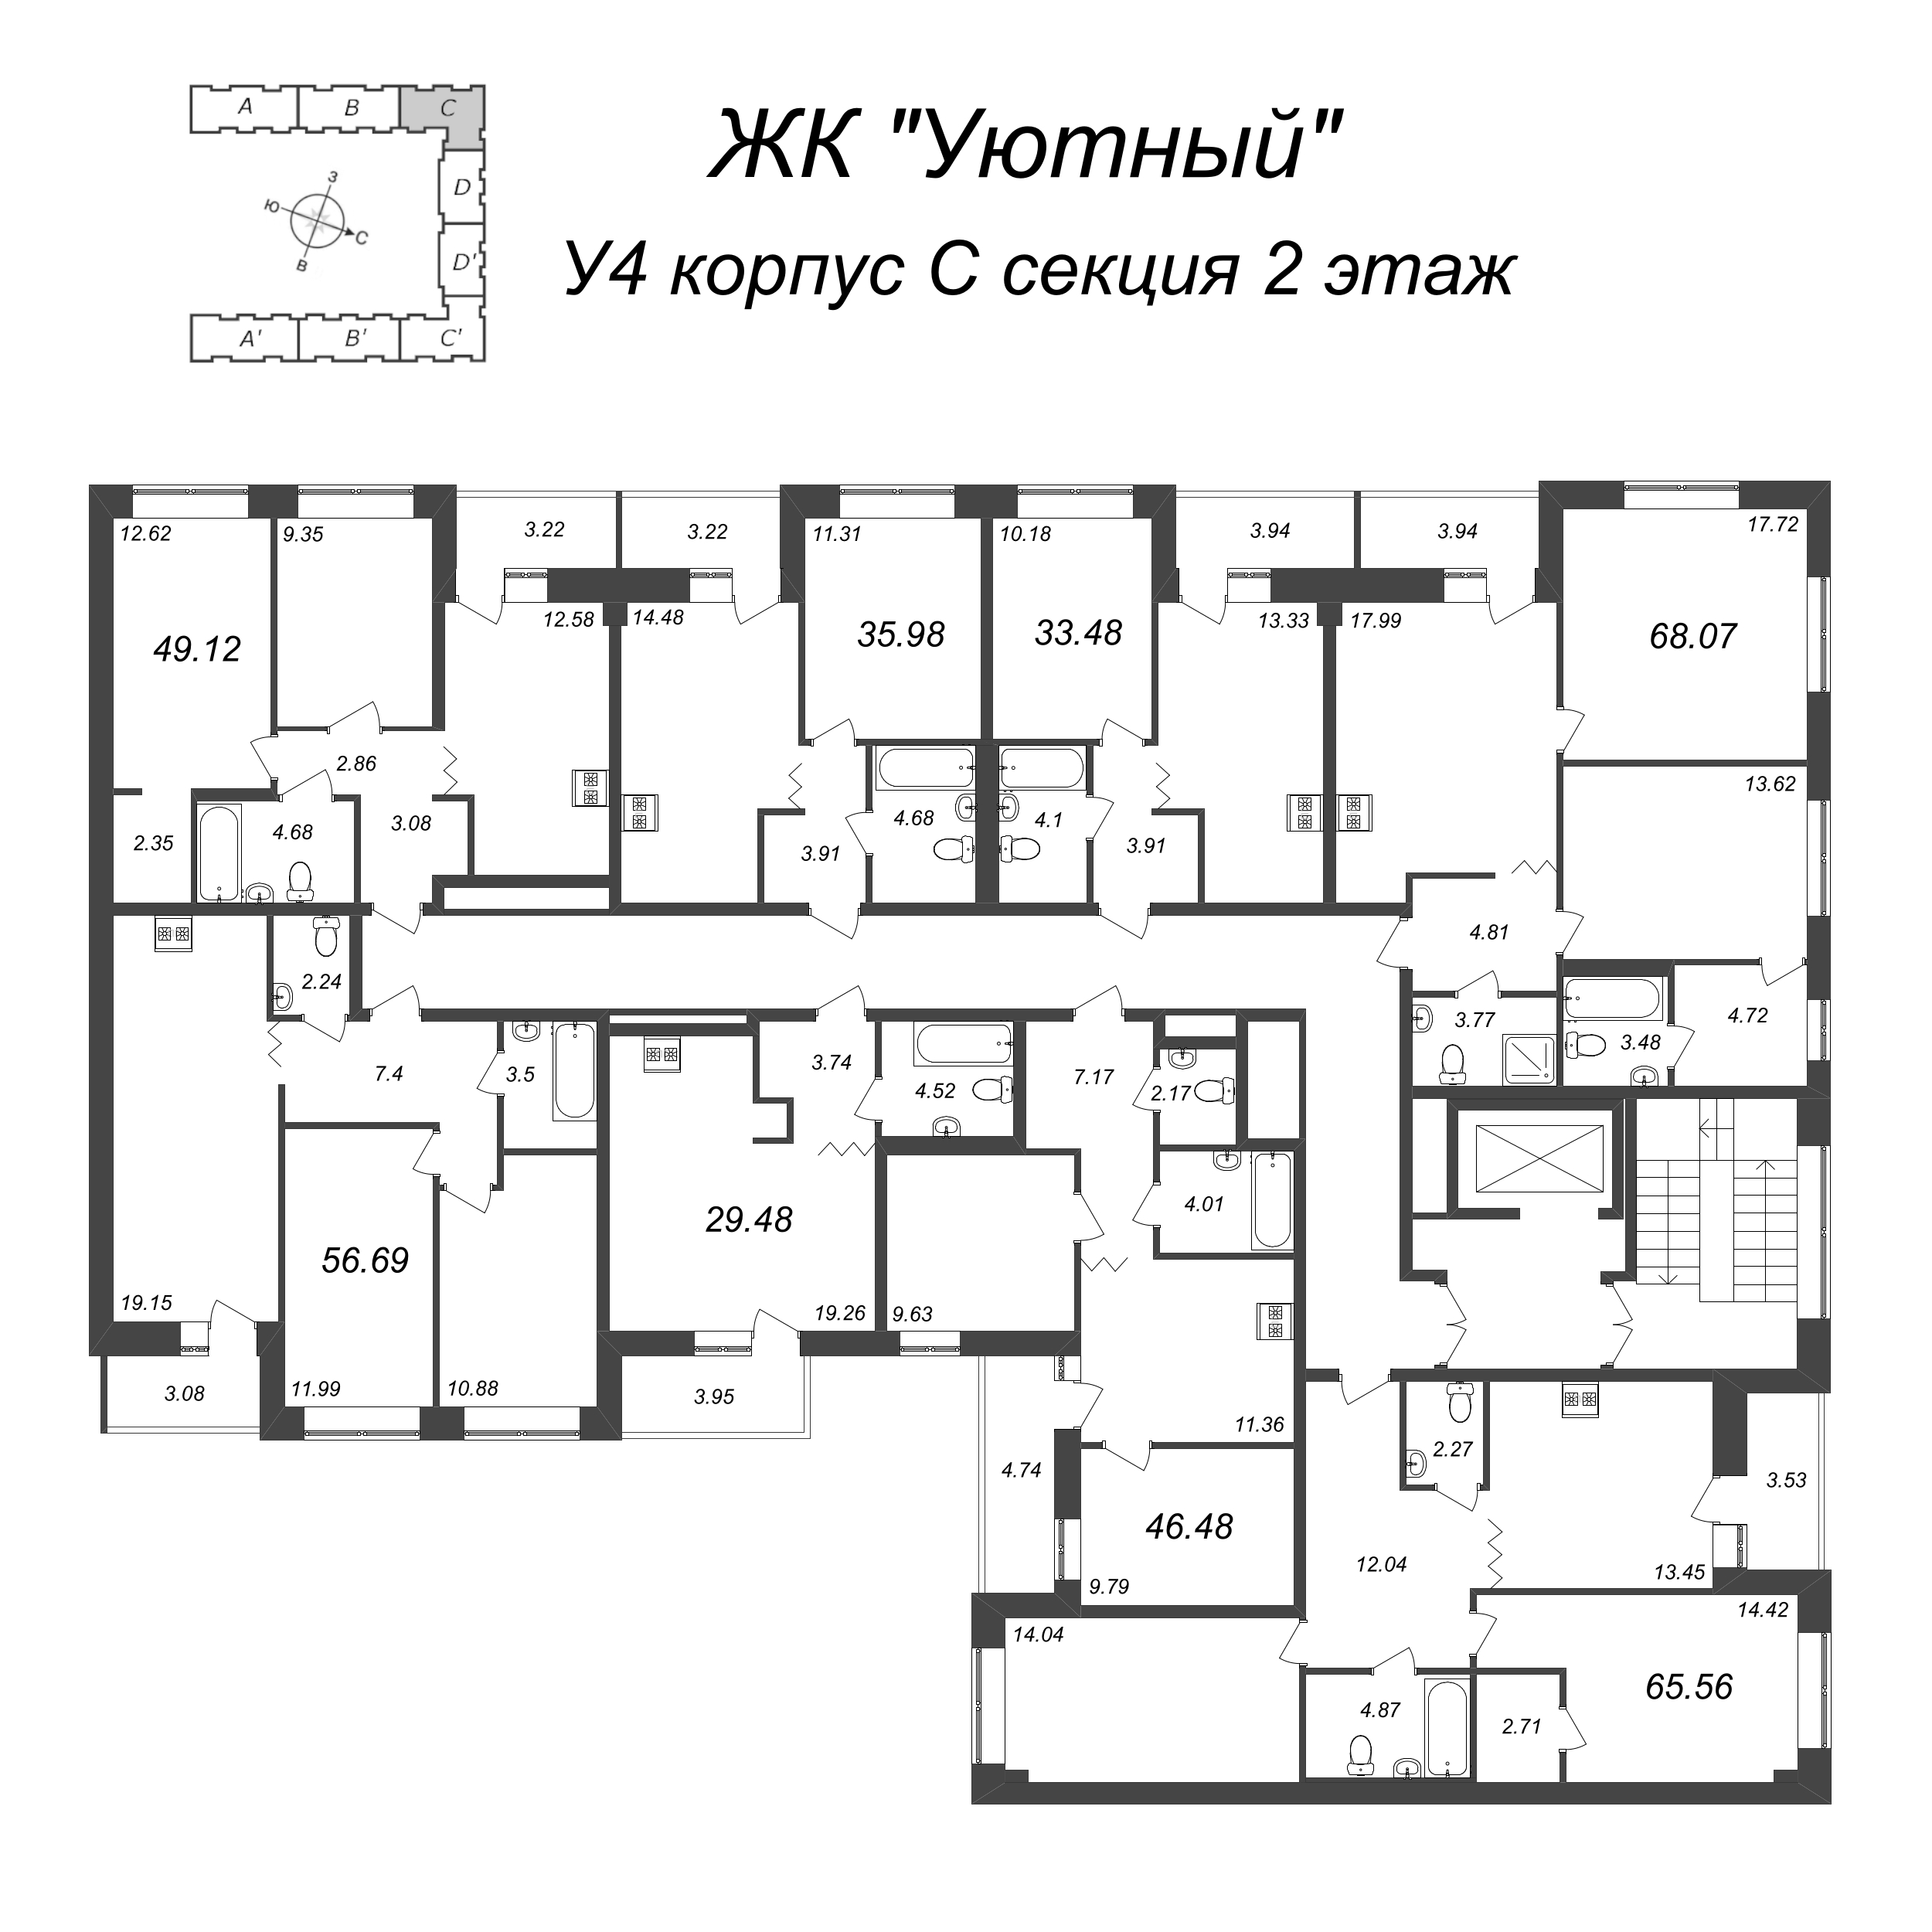 3-комнатная (Евро) квартира, 56.69 м² - планировка этажа